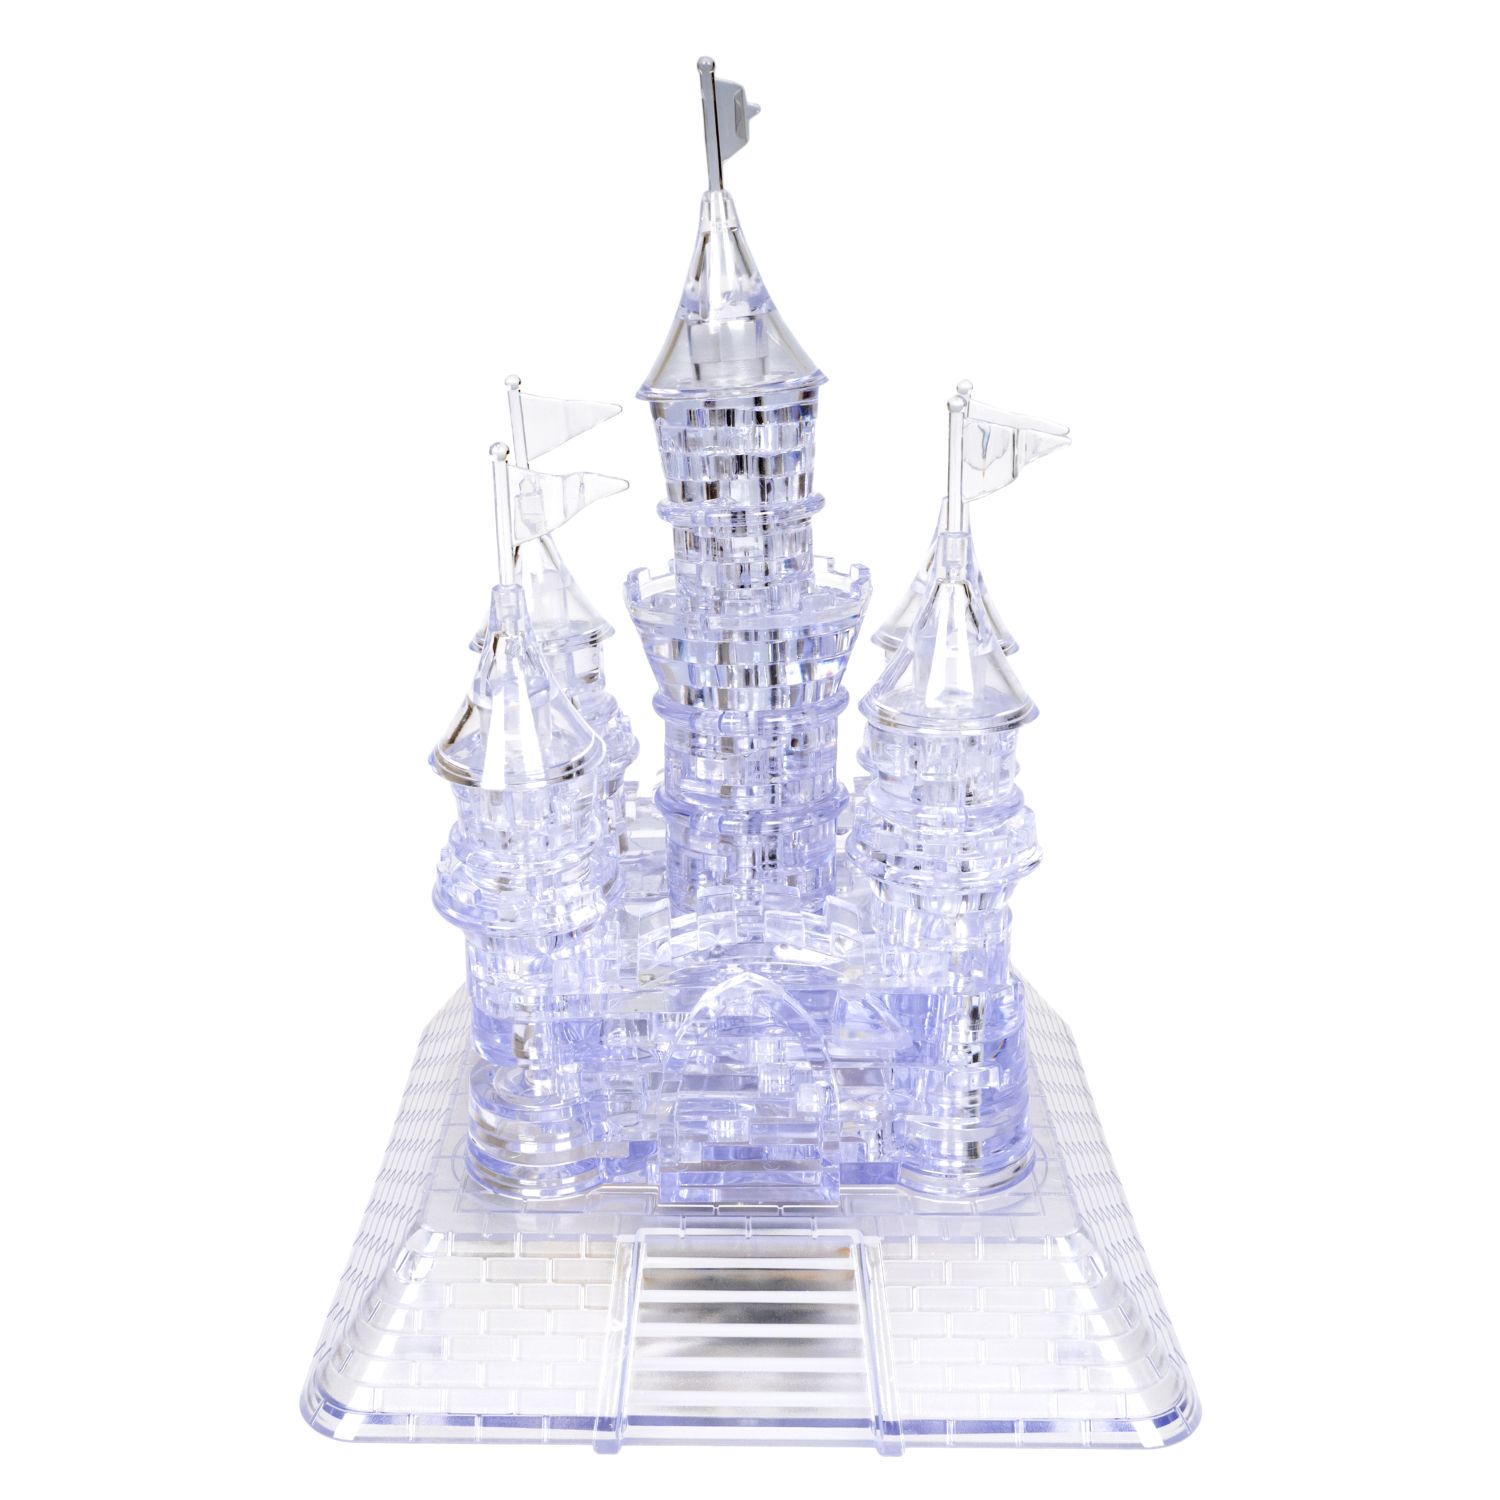 3D головоломка "Замок" 